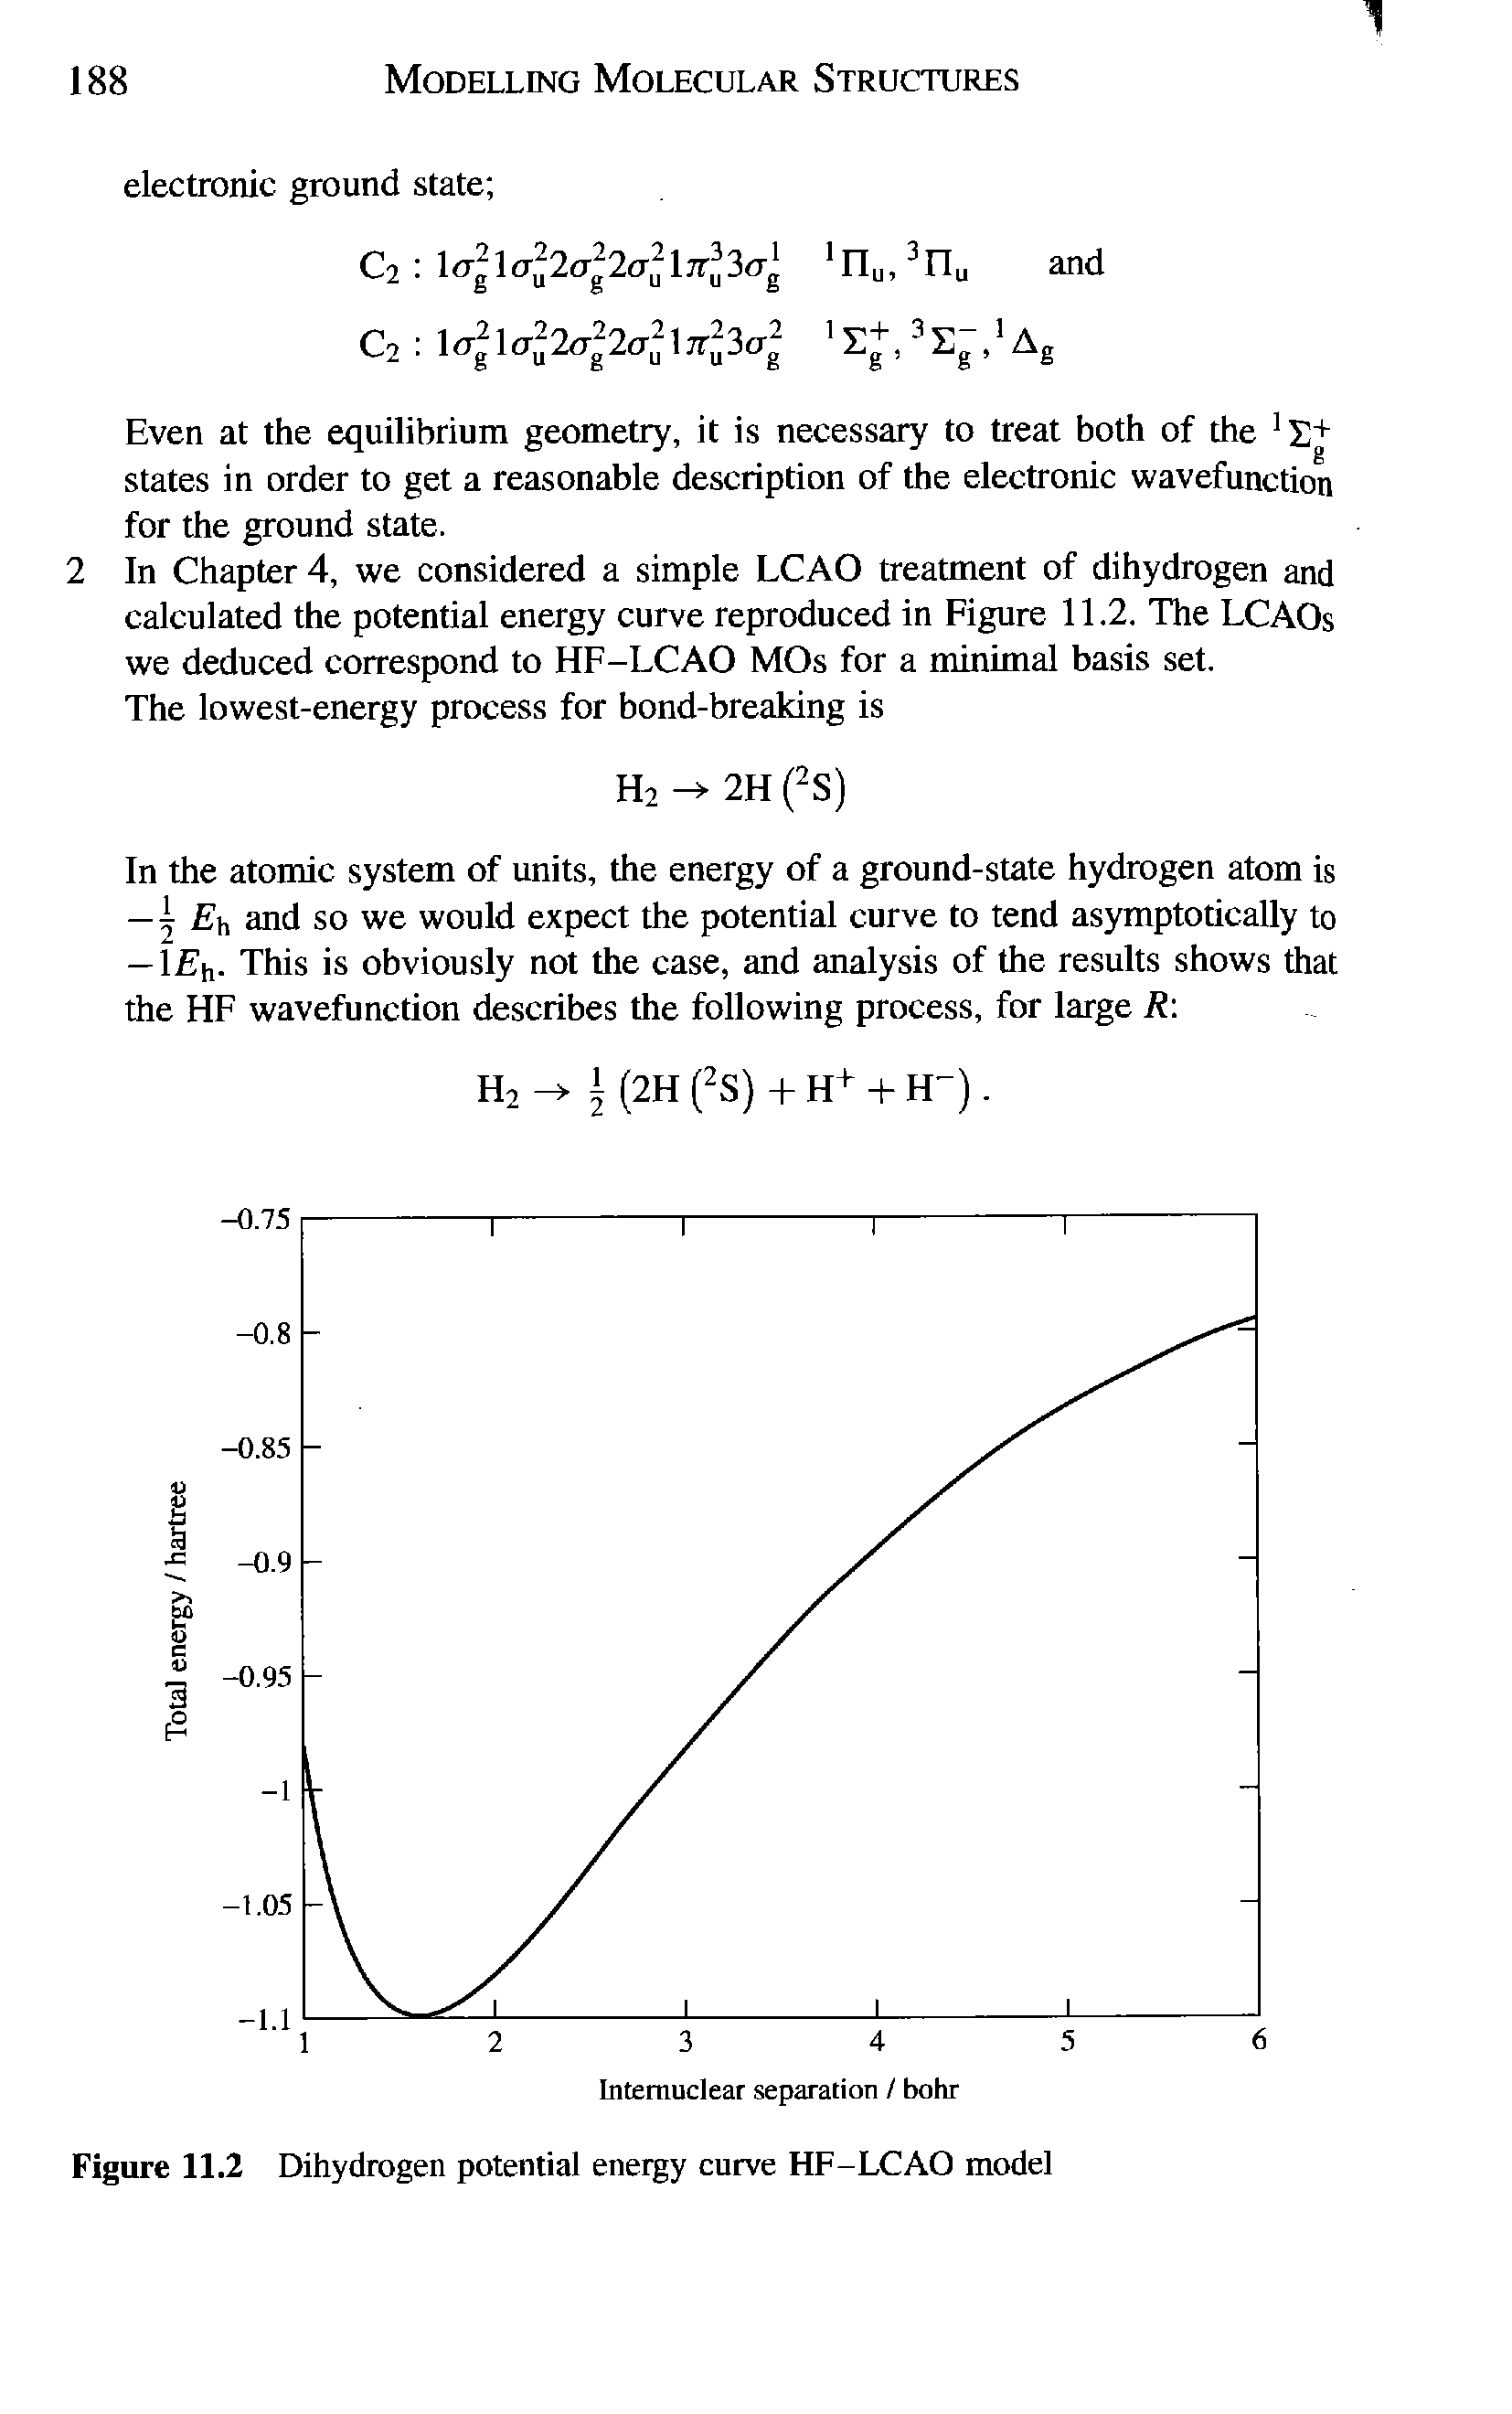 Figure 11.2 Dihydrogen potential energy curve HF-LCAO model...